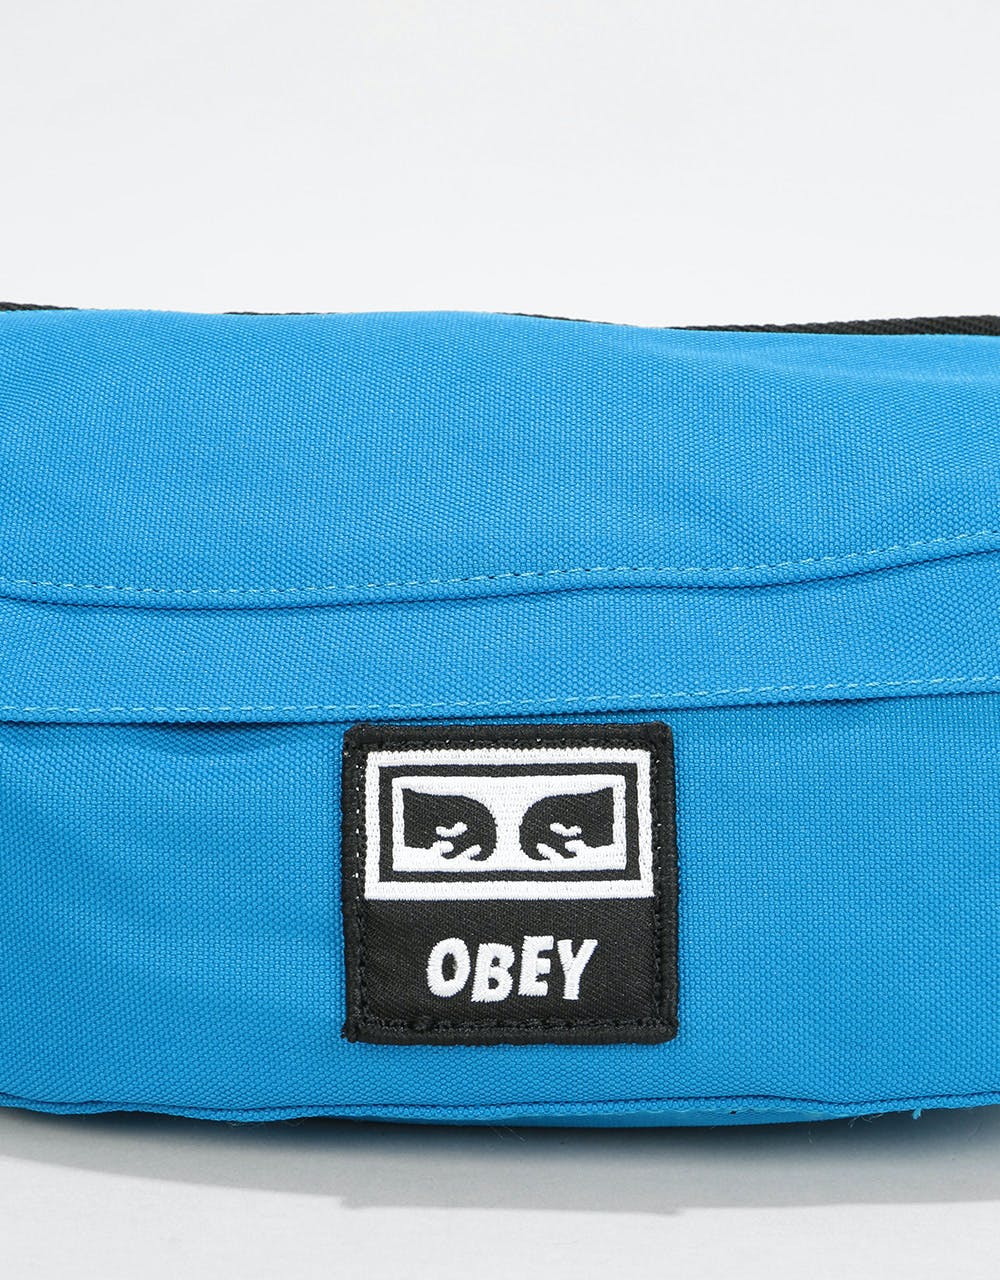 Obey Drop Out Sling Cross Body Bag - Sky Blue